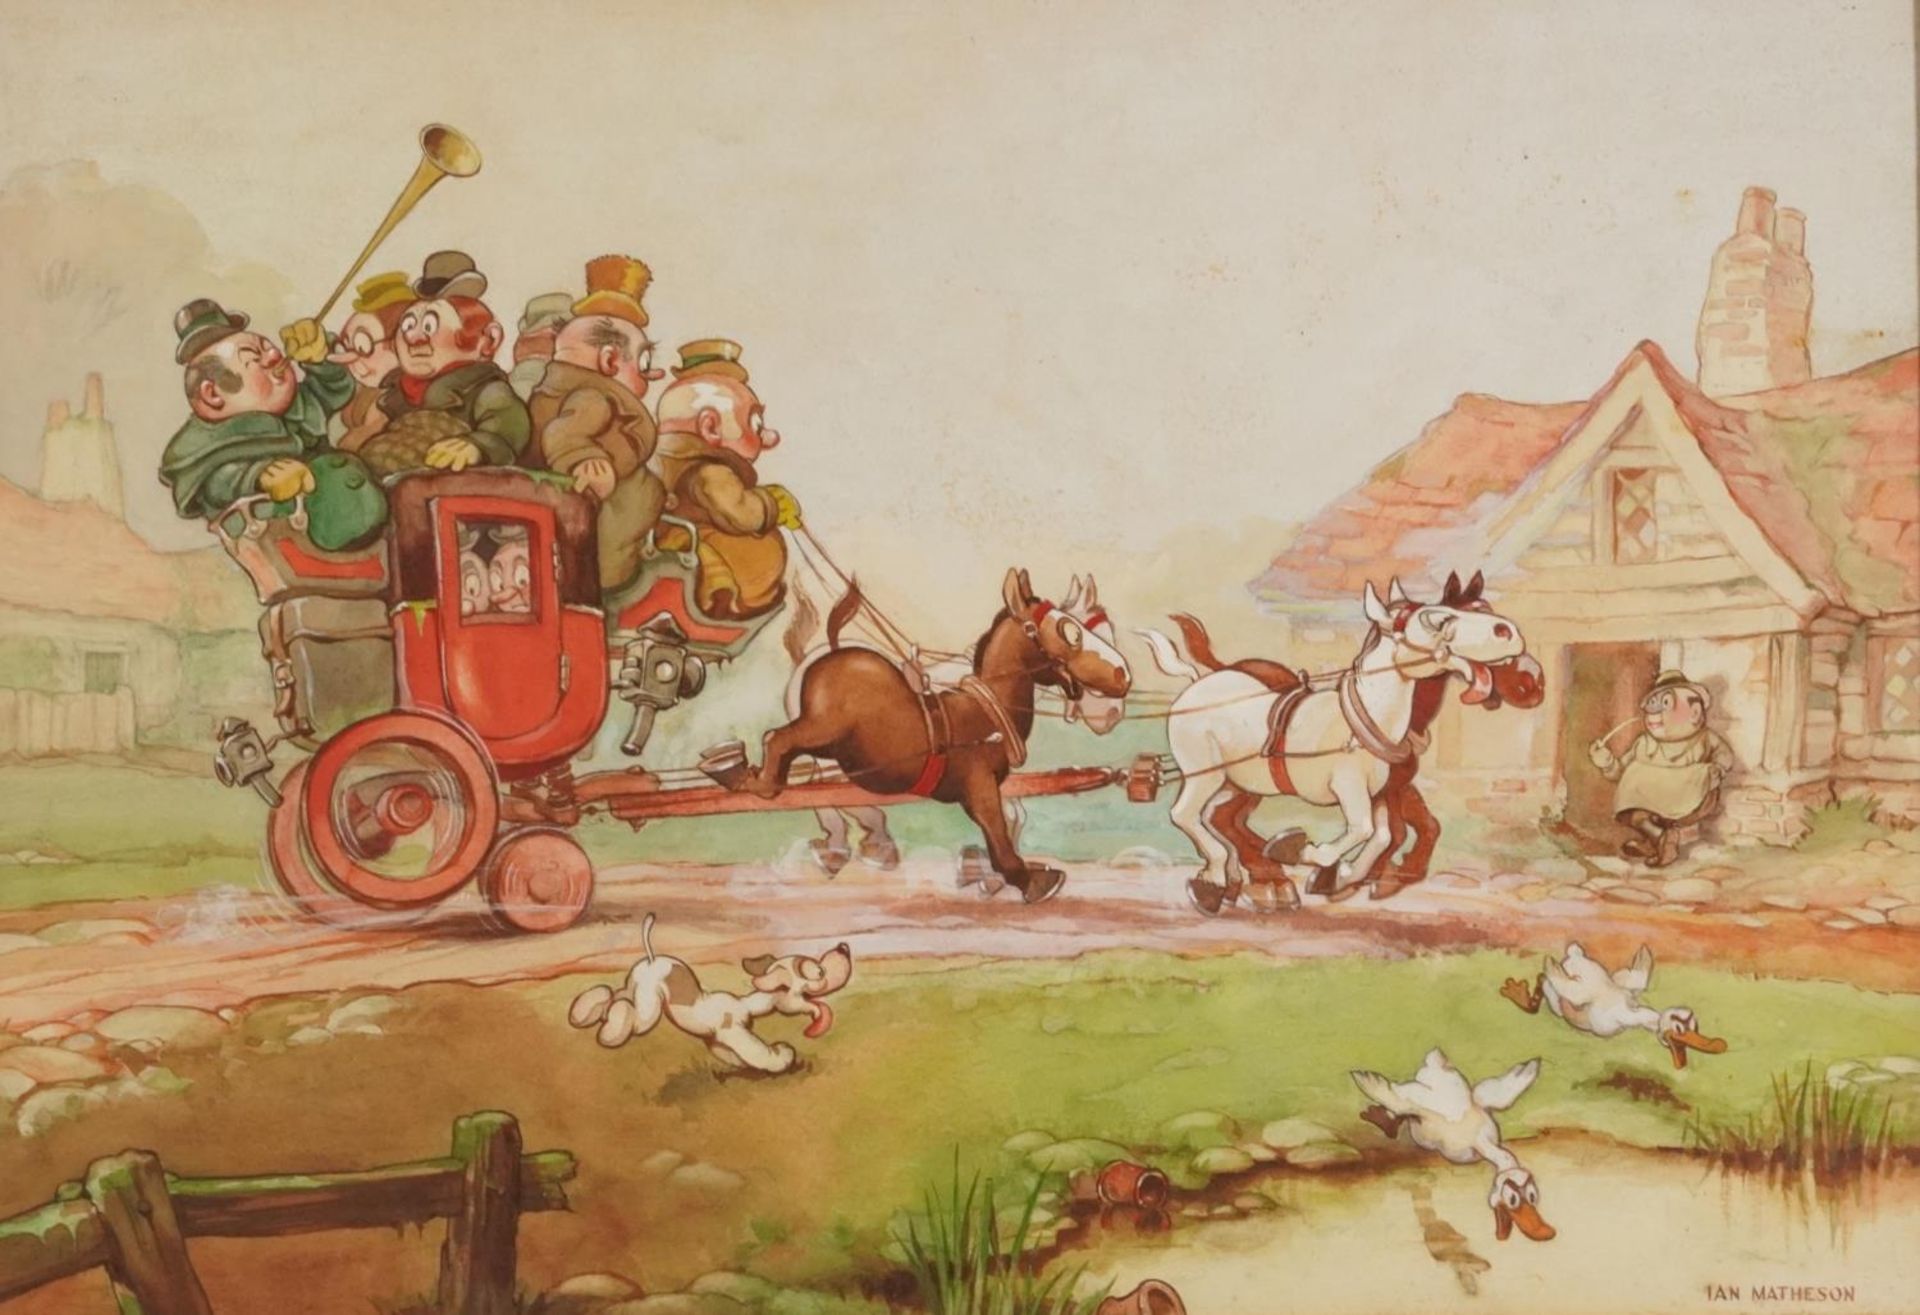 Ian Matheson - Horse drawn cart, comical watercolour illustration, framed and glazed, 49cm x 34cm